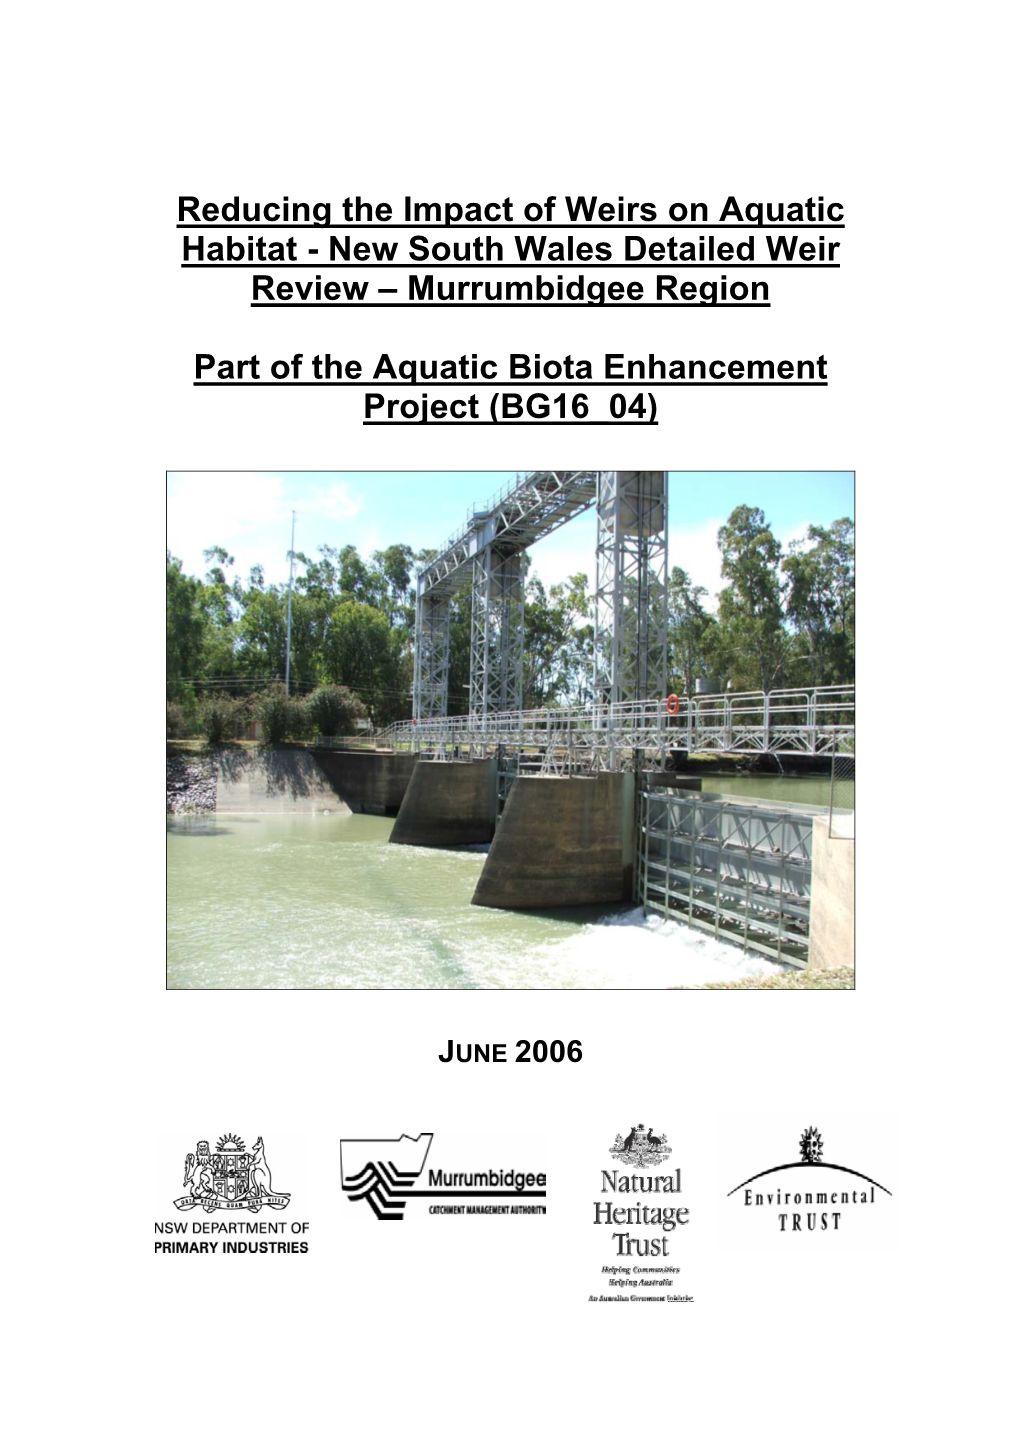 New South Wales Detailed Weir Review – Murrumbidgee Region